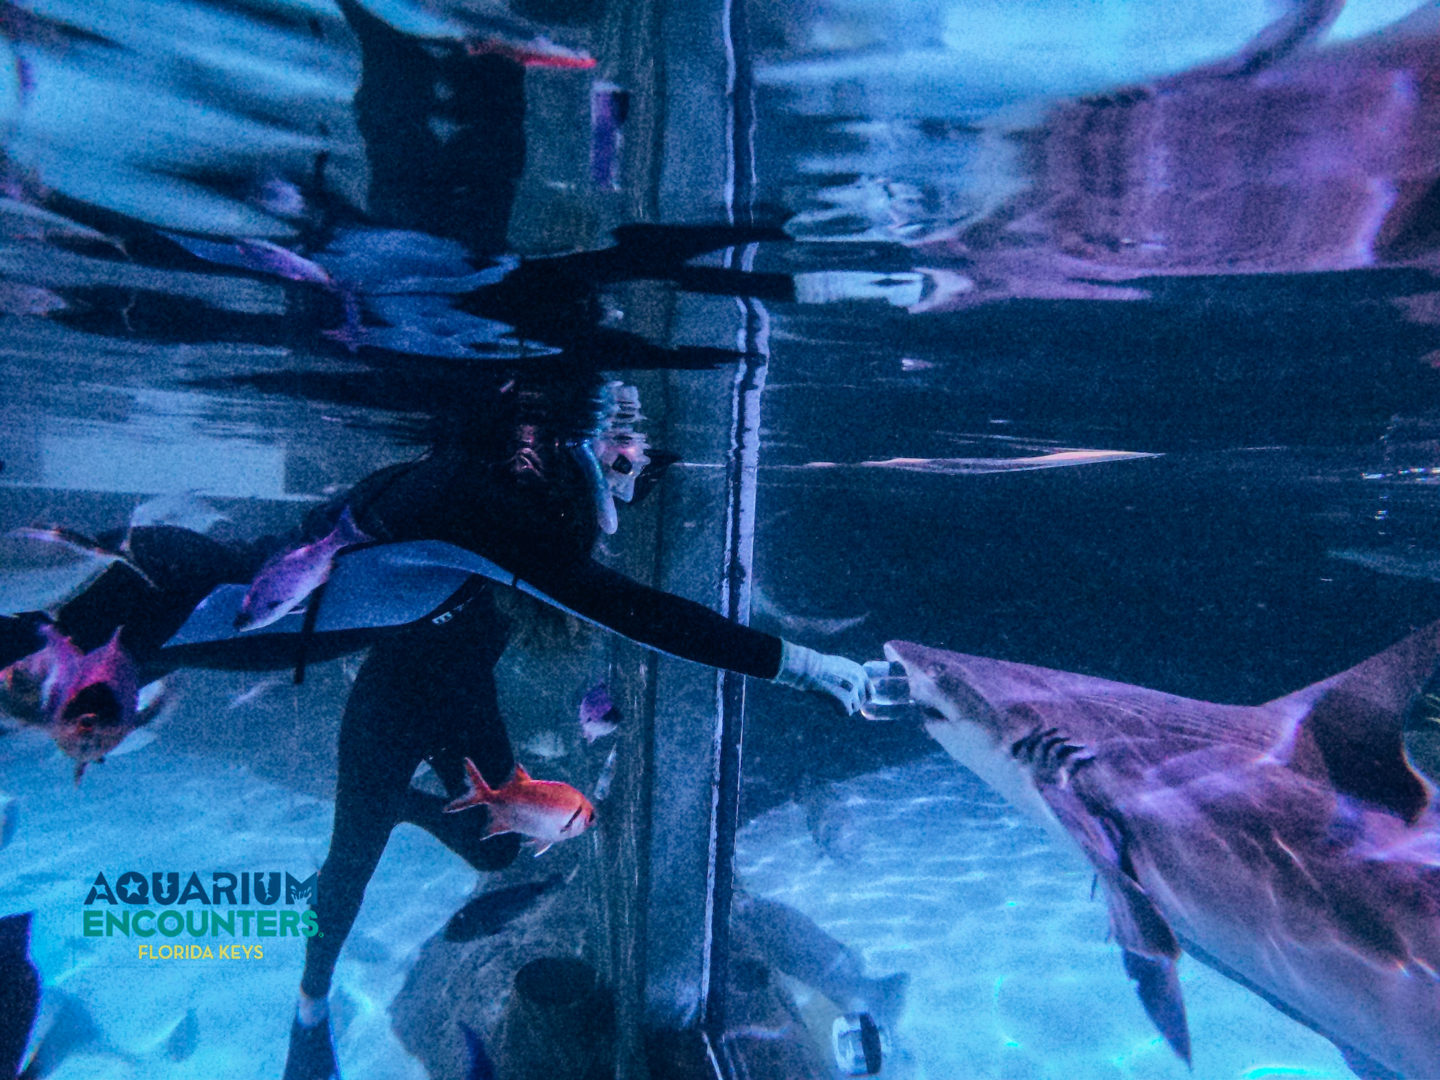 Katy feeding shark - Aquarium Encounters, Marathon Key